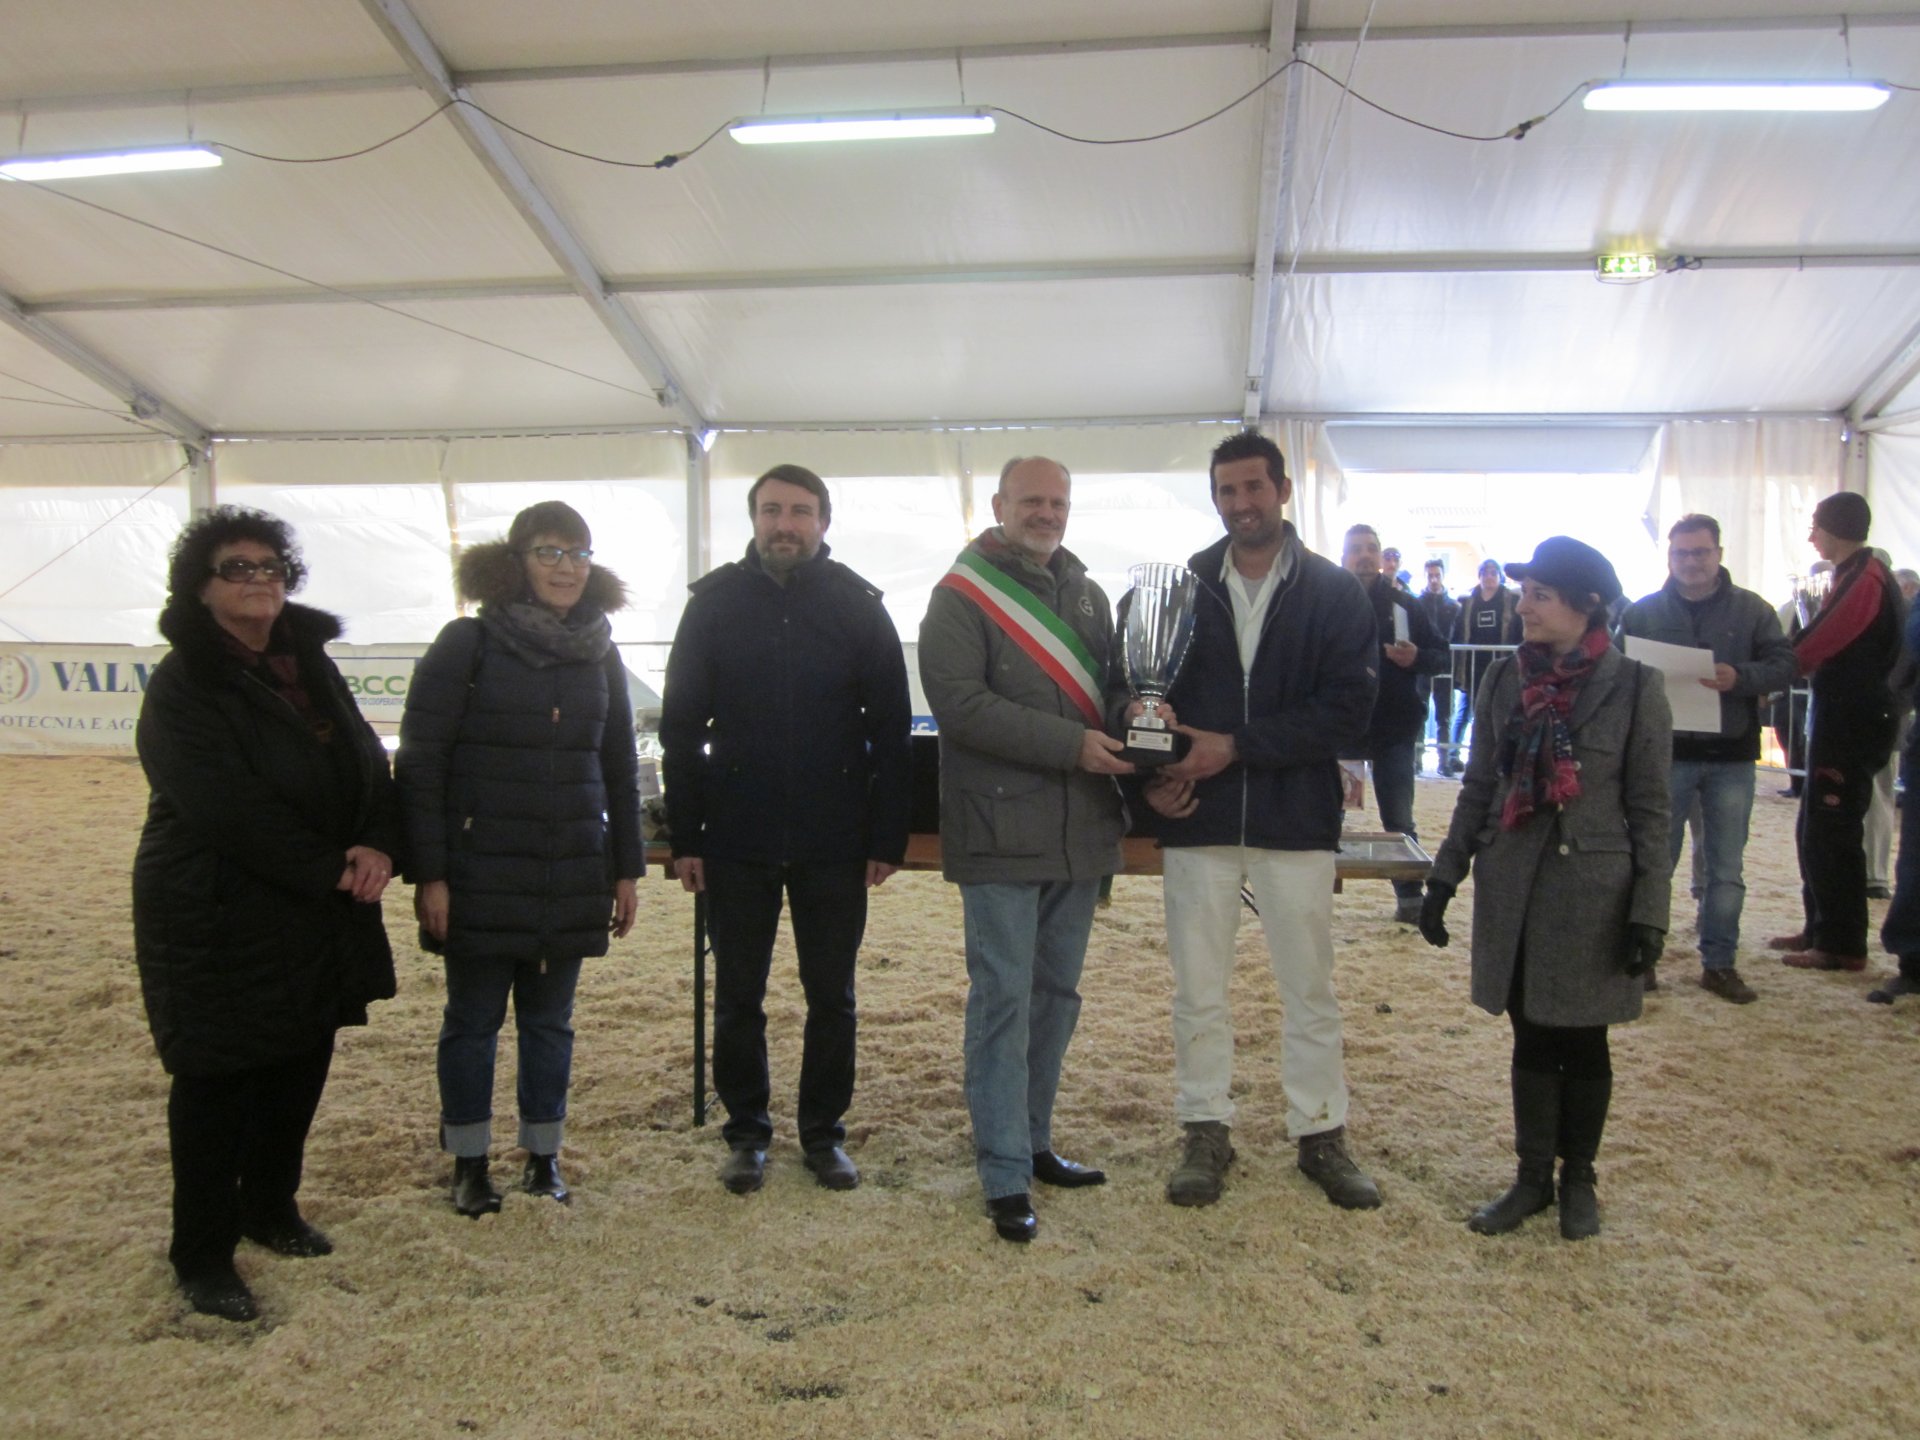 Nozza Farm Holstein di Salvoni Emanuele di Chiari Campionessa assoluta